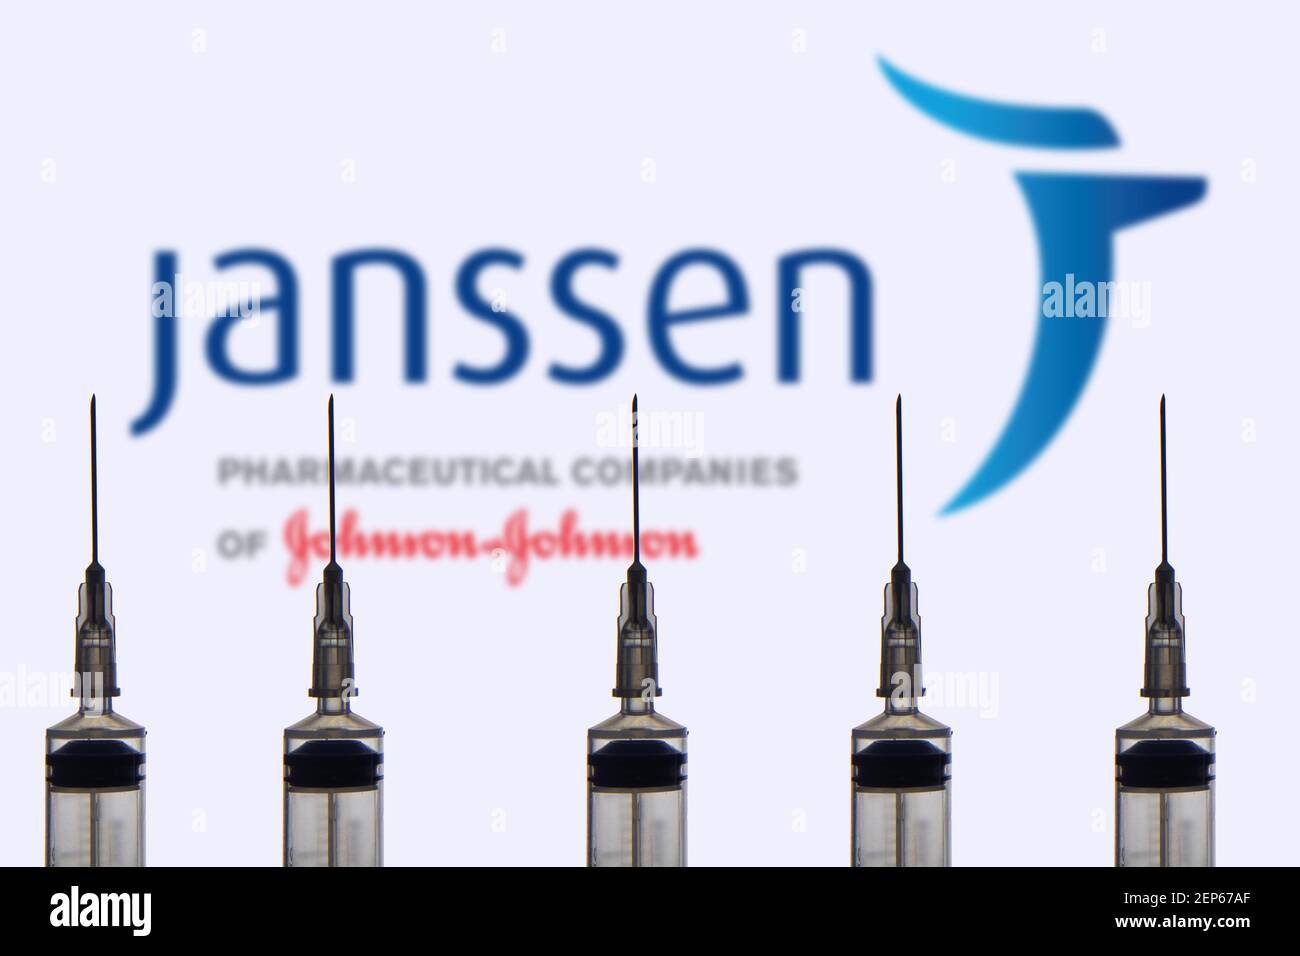 Kathmandu, Nepal - February 26 2021: Janssen Pharmaceutical Companies logo against Syringe or Inject needle. Johnson and Johnson's Coronavirus vaccine Stock Photo